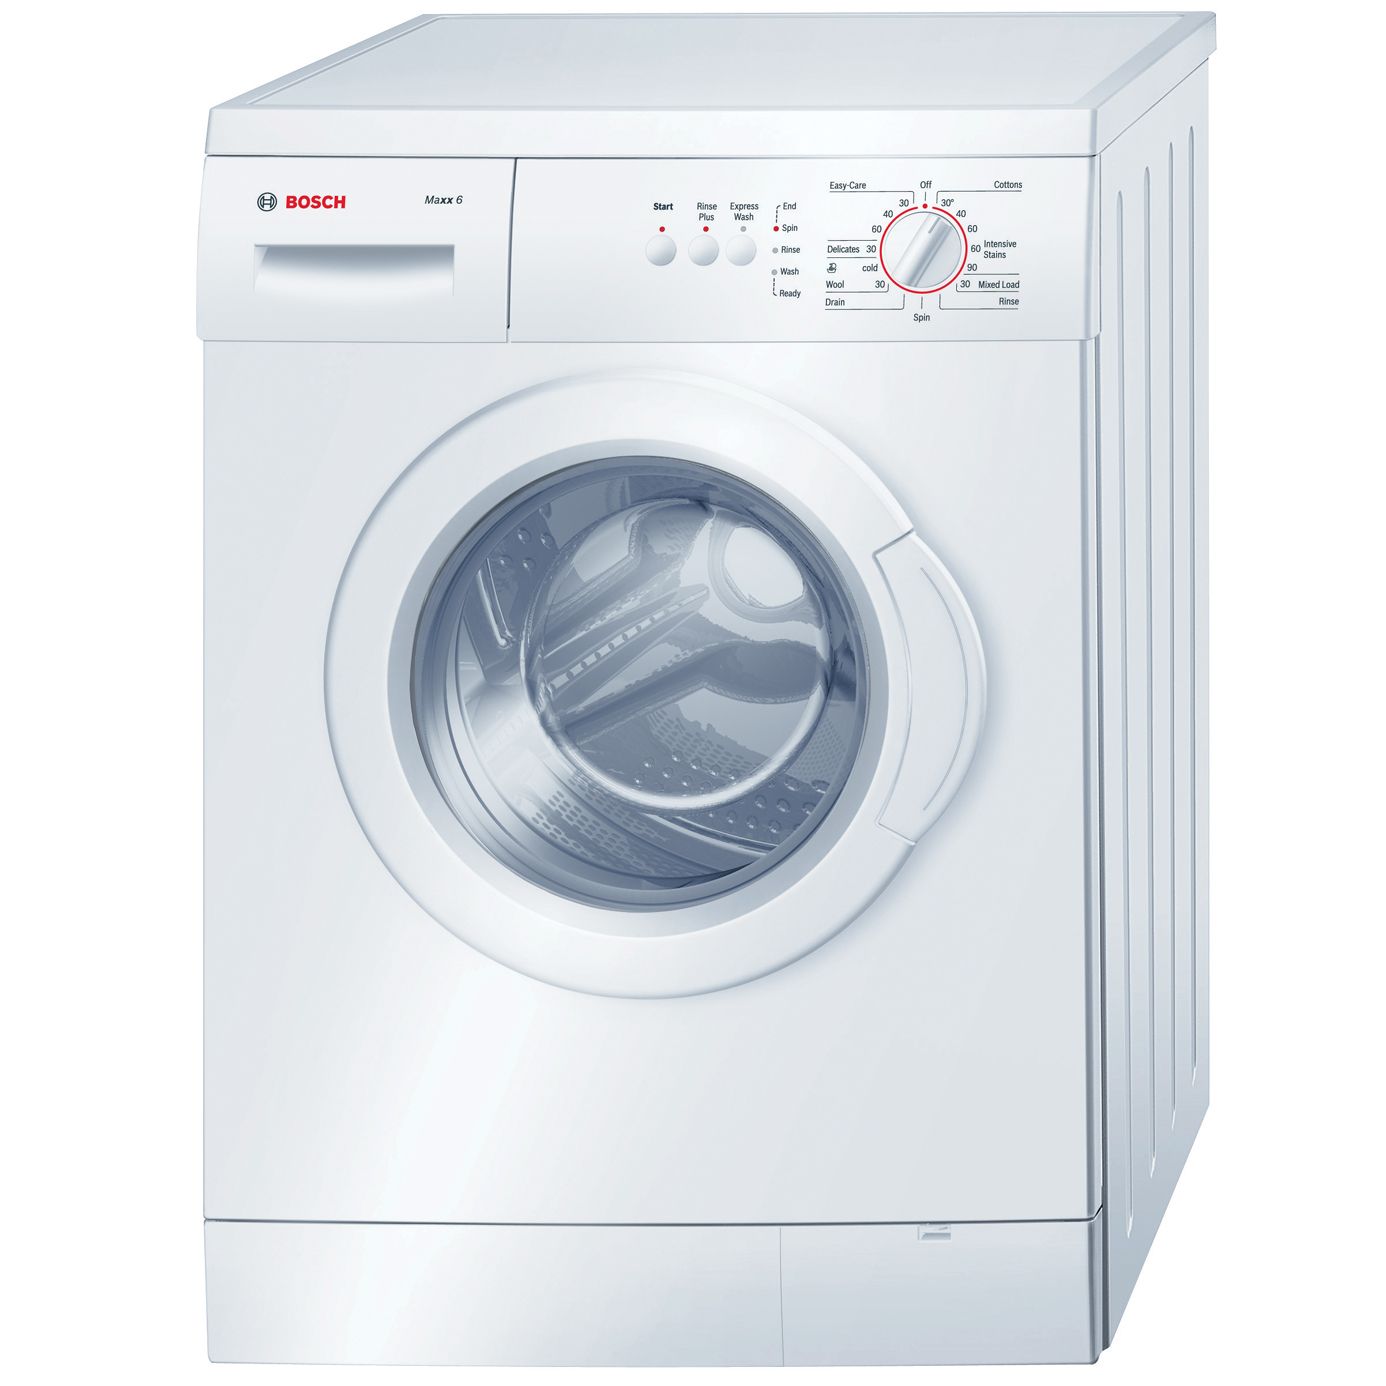 Bosch WAE24060GB Maxx 6 Washing Machine, White at JohnLewis